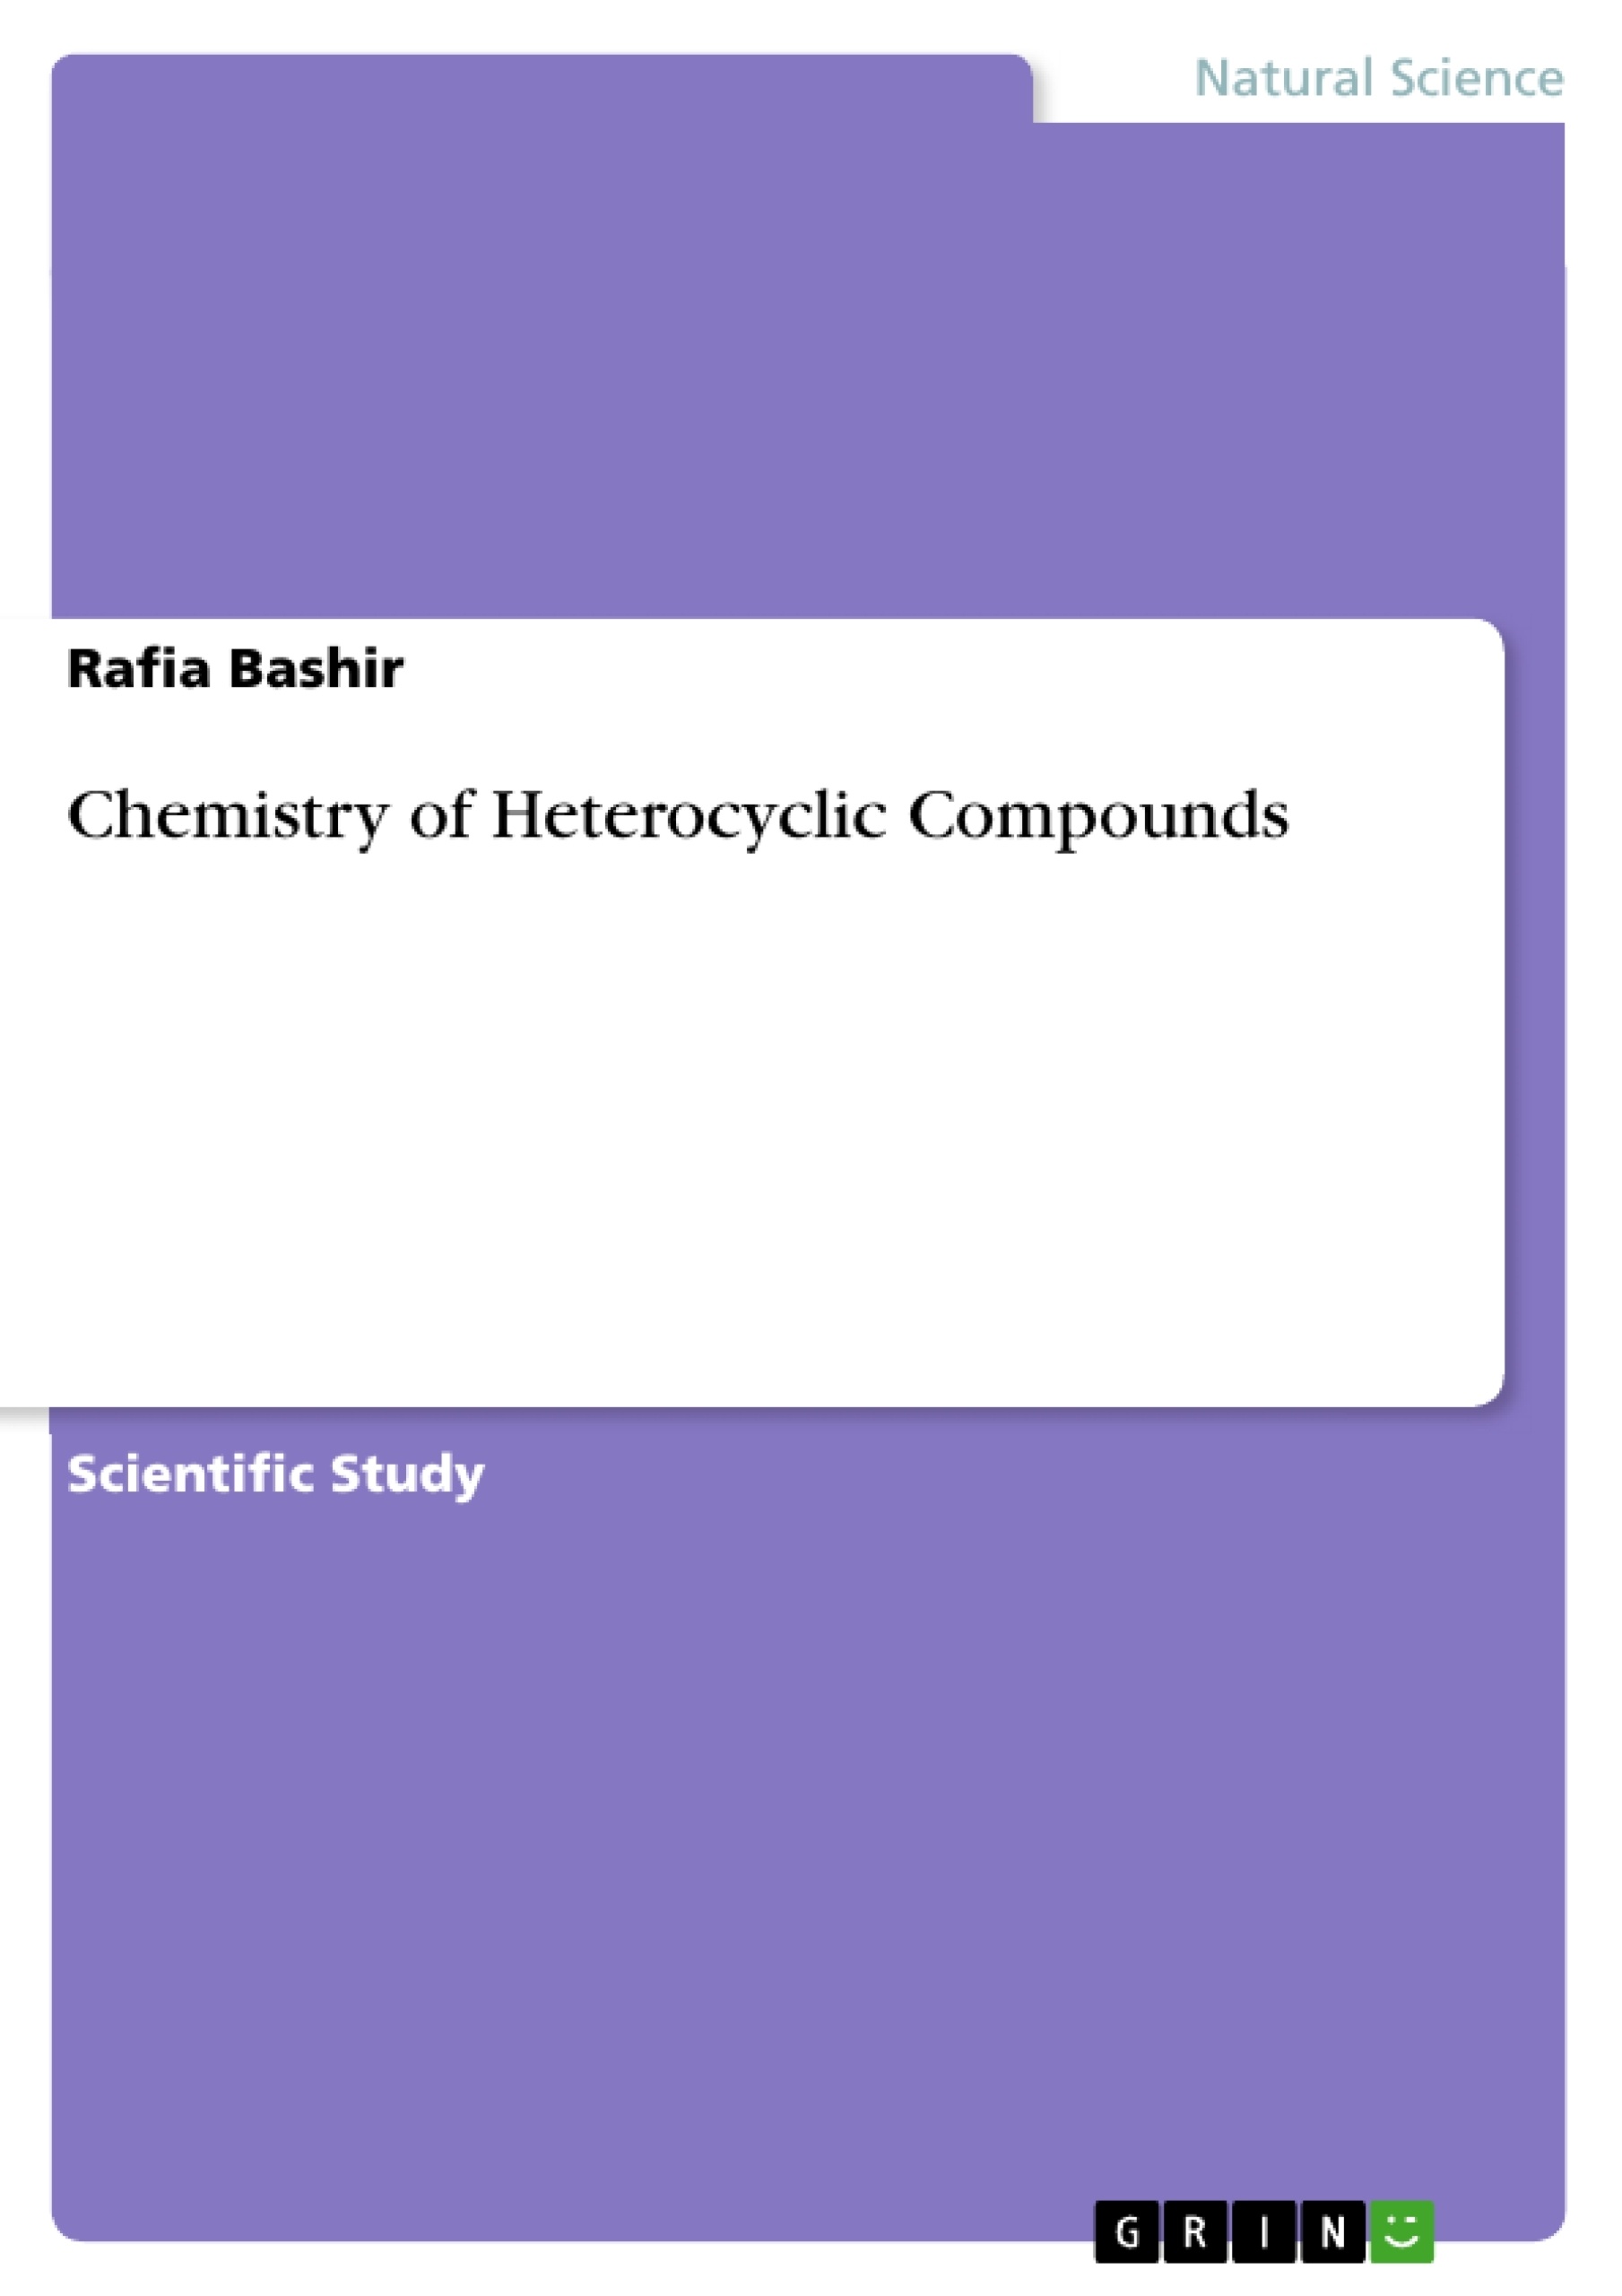 Title: Chemistry of Heterocyclic Compounds